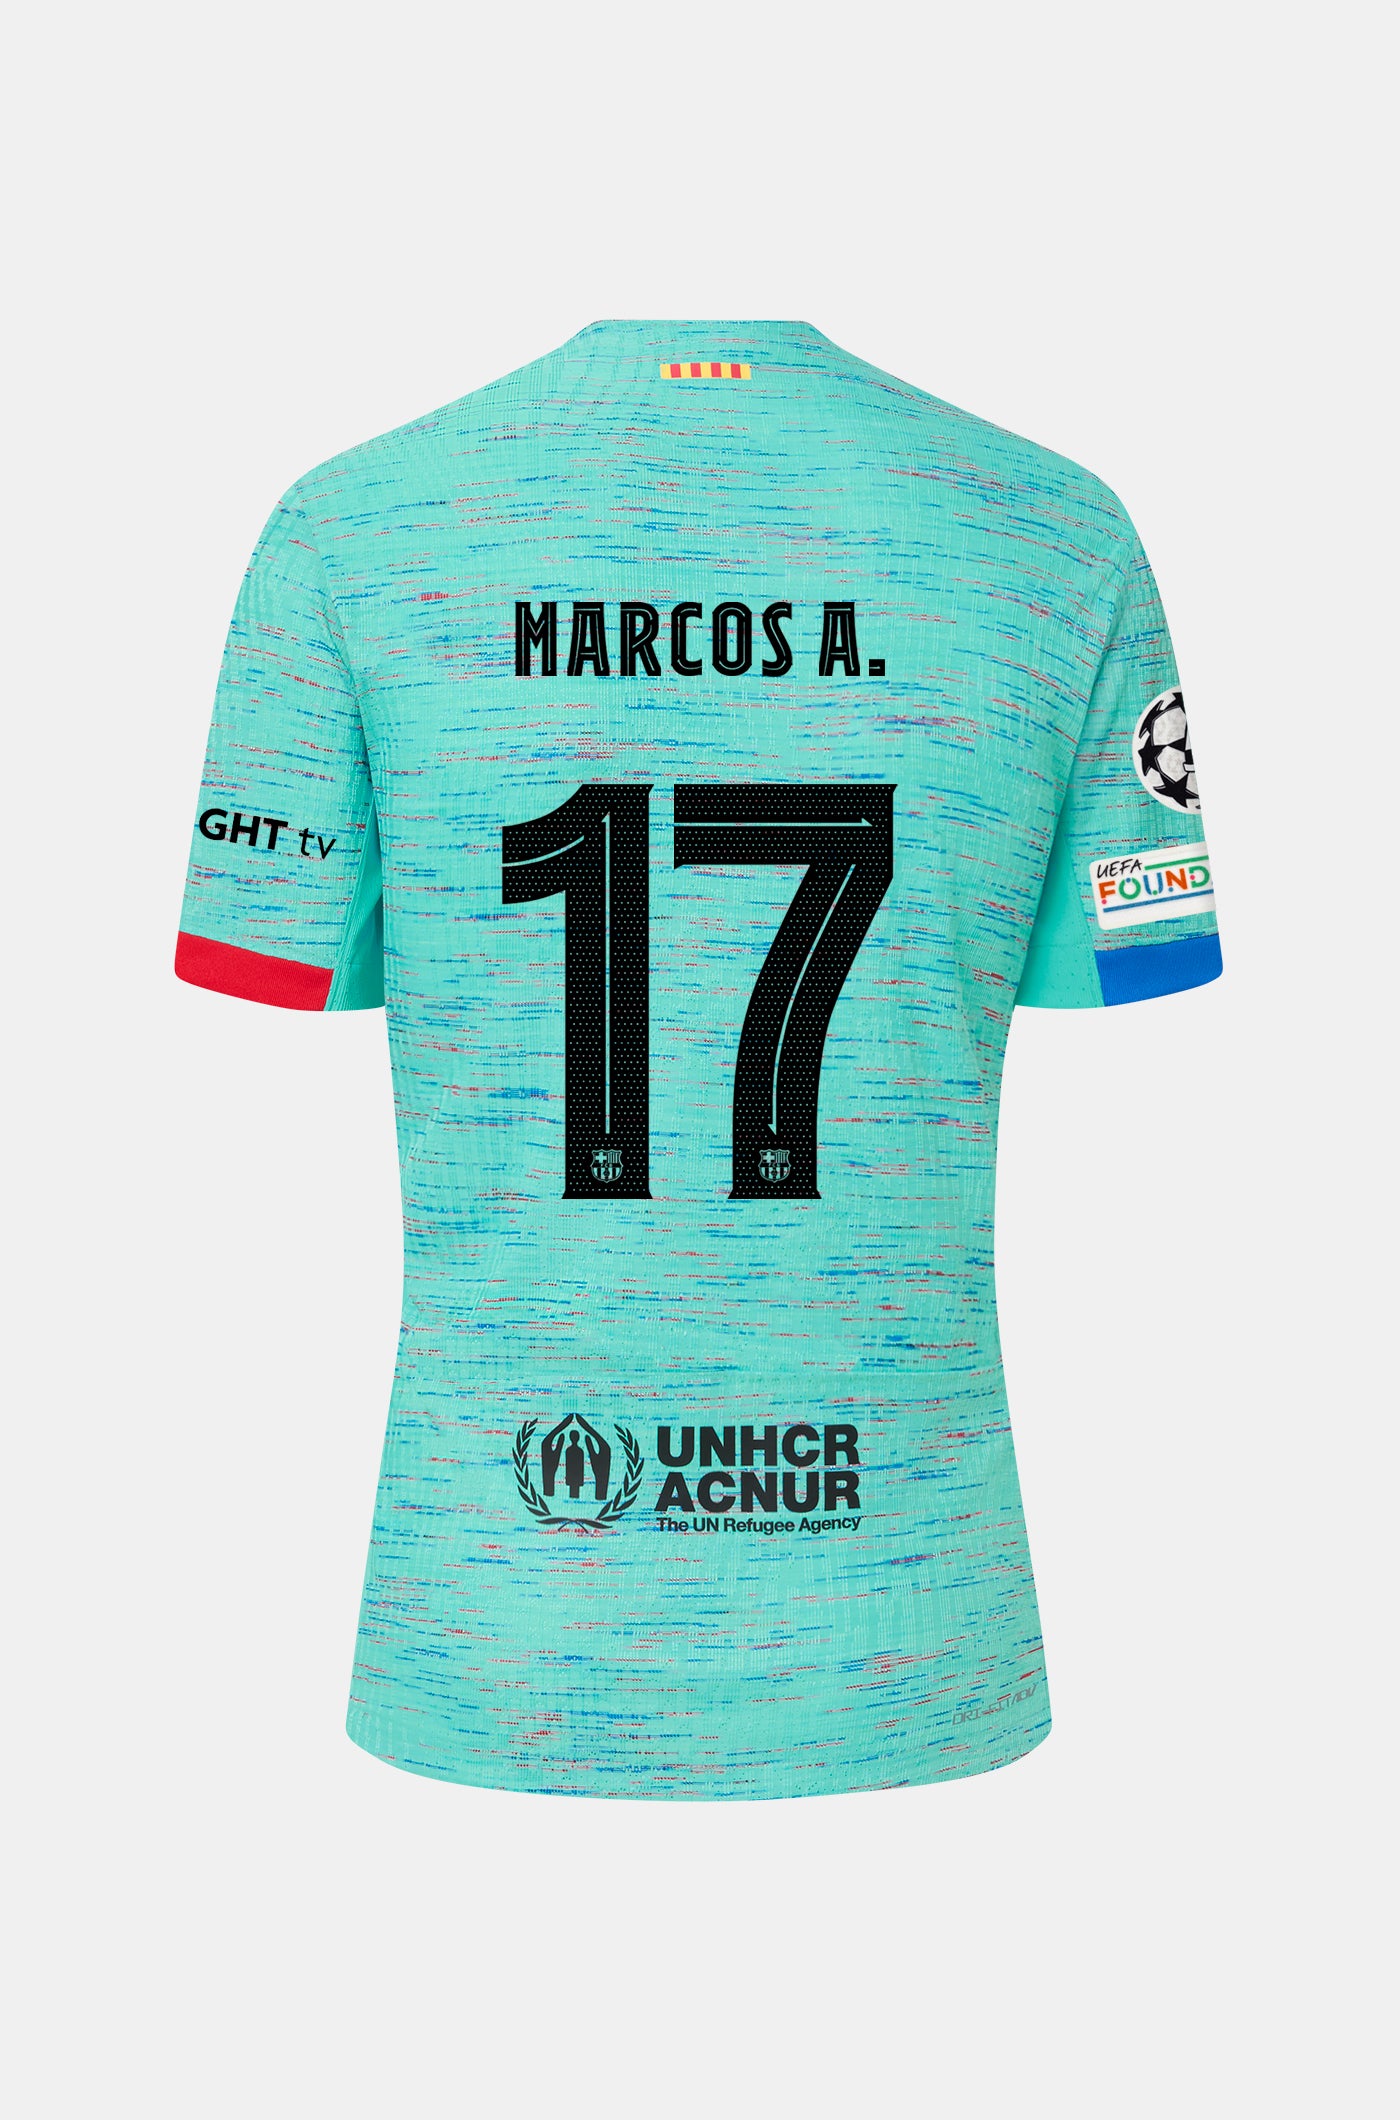 17. Marcos A. – Barça Official Store Spotify Camp Nou